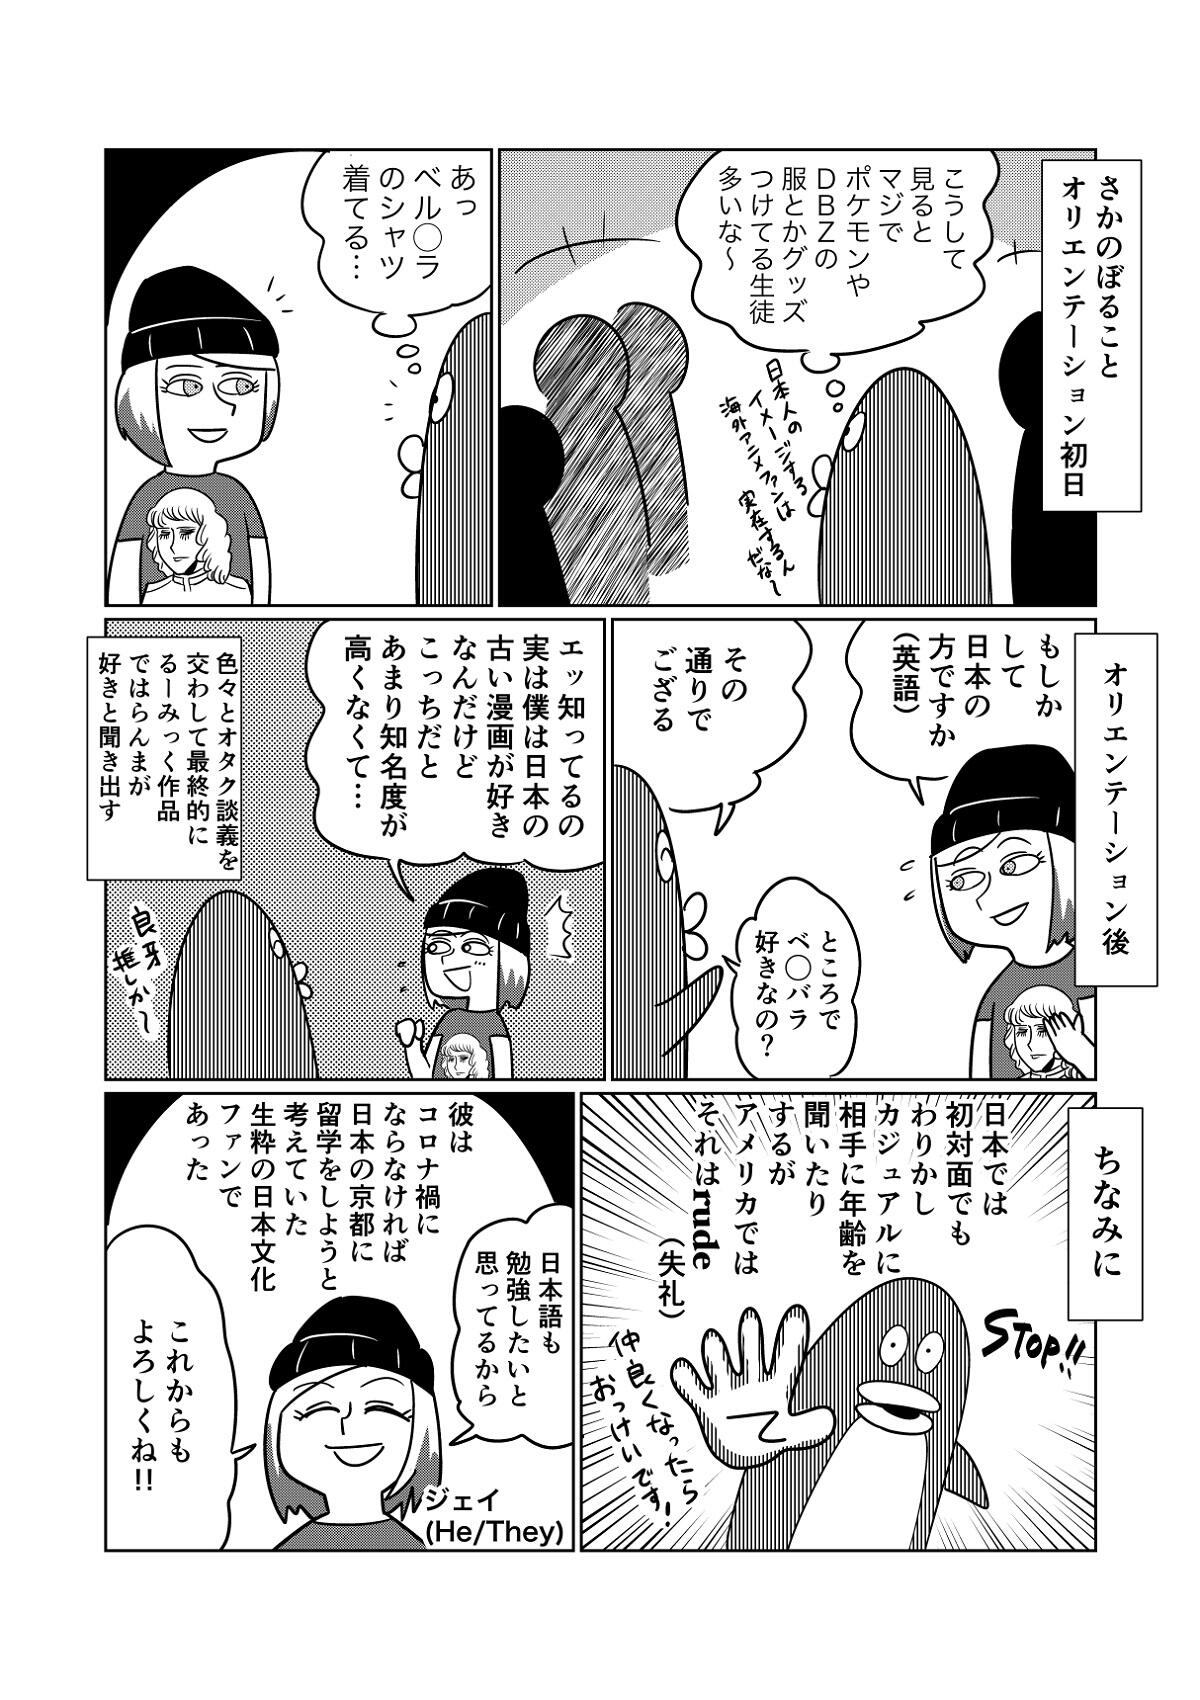 https://www.ryugaku.co.jp/column/images/8_3_1200.jpg